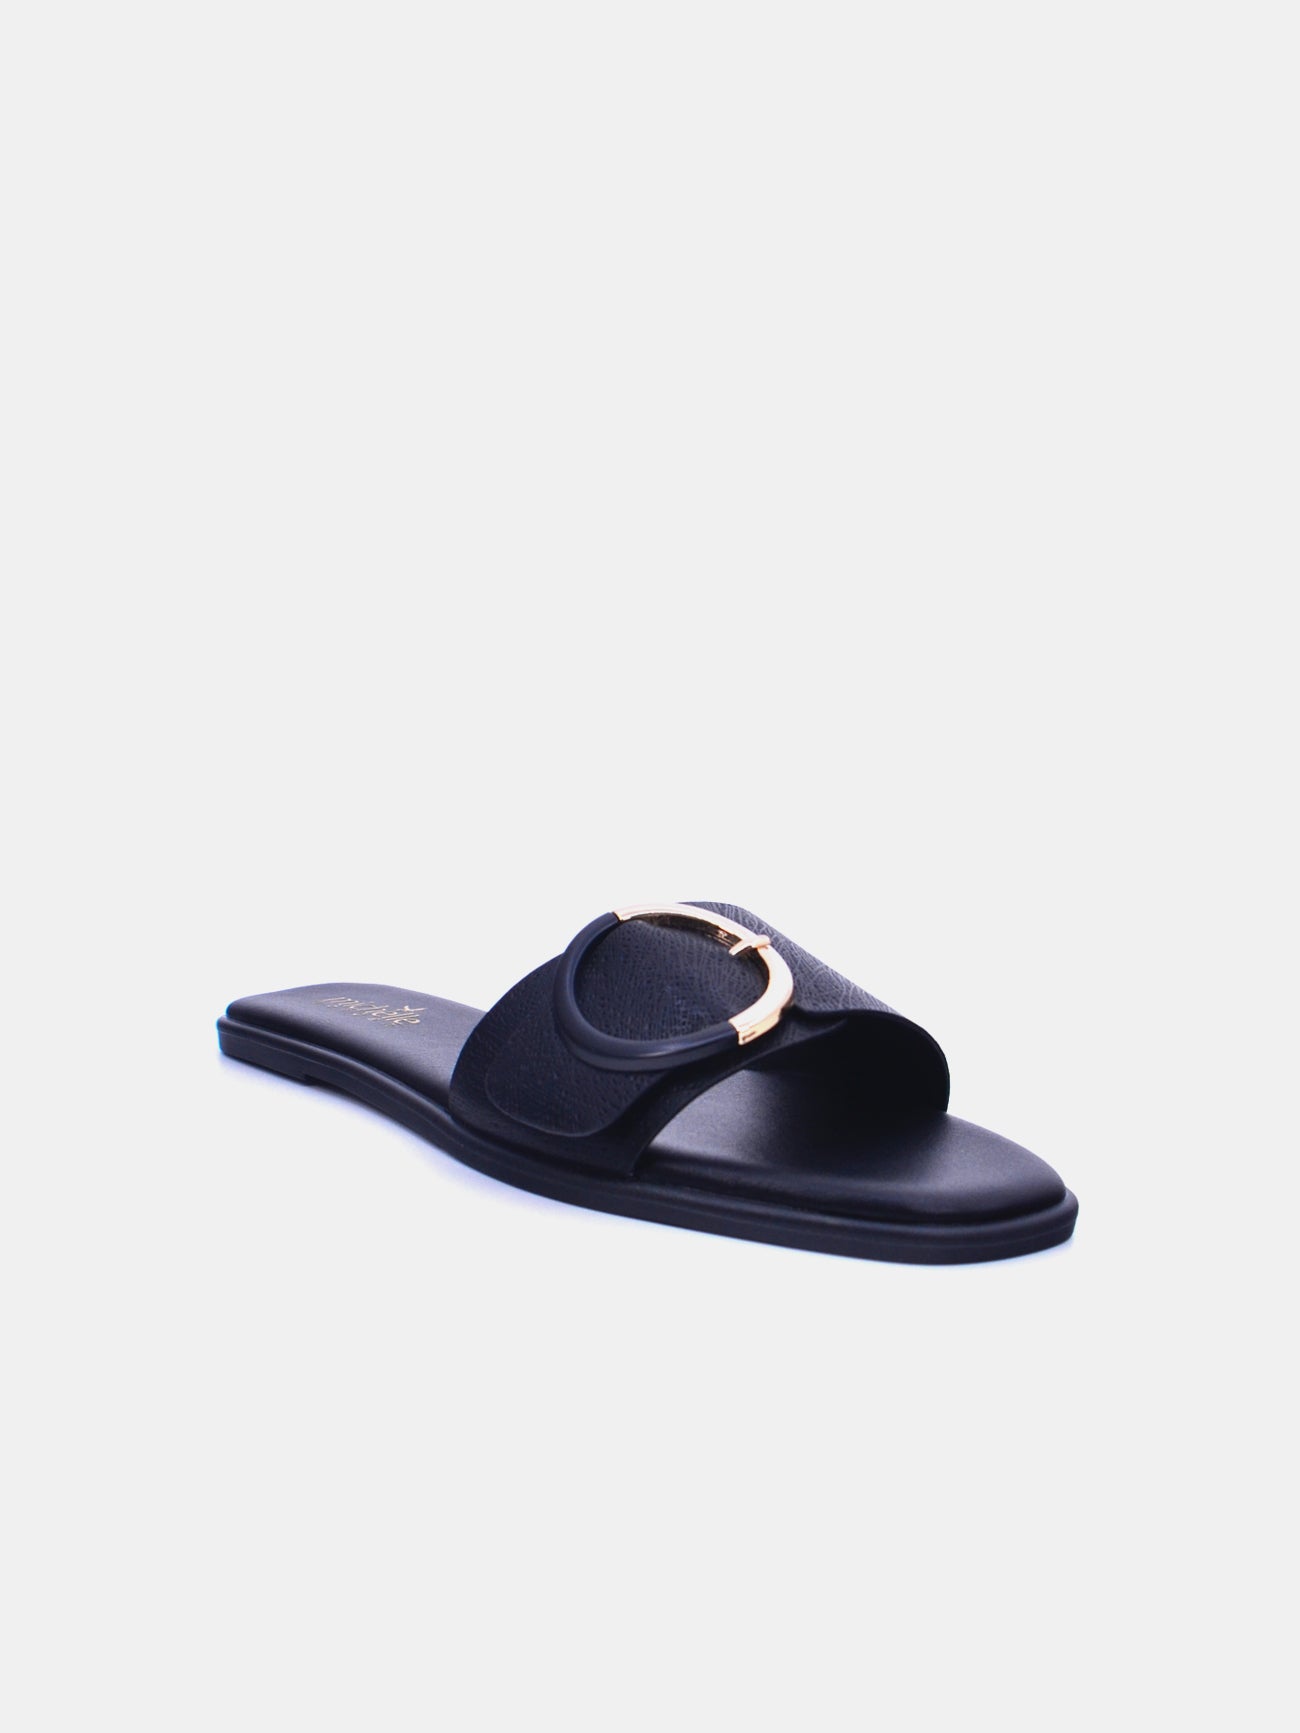 Michelle Morgan 114RL105 Women's Flat Sandals #color_Black